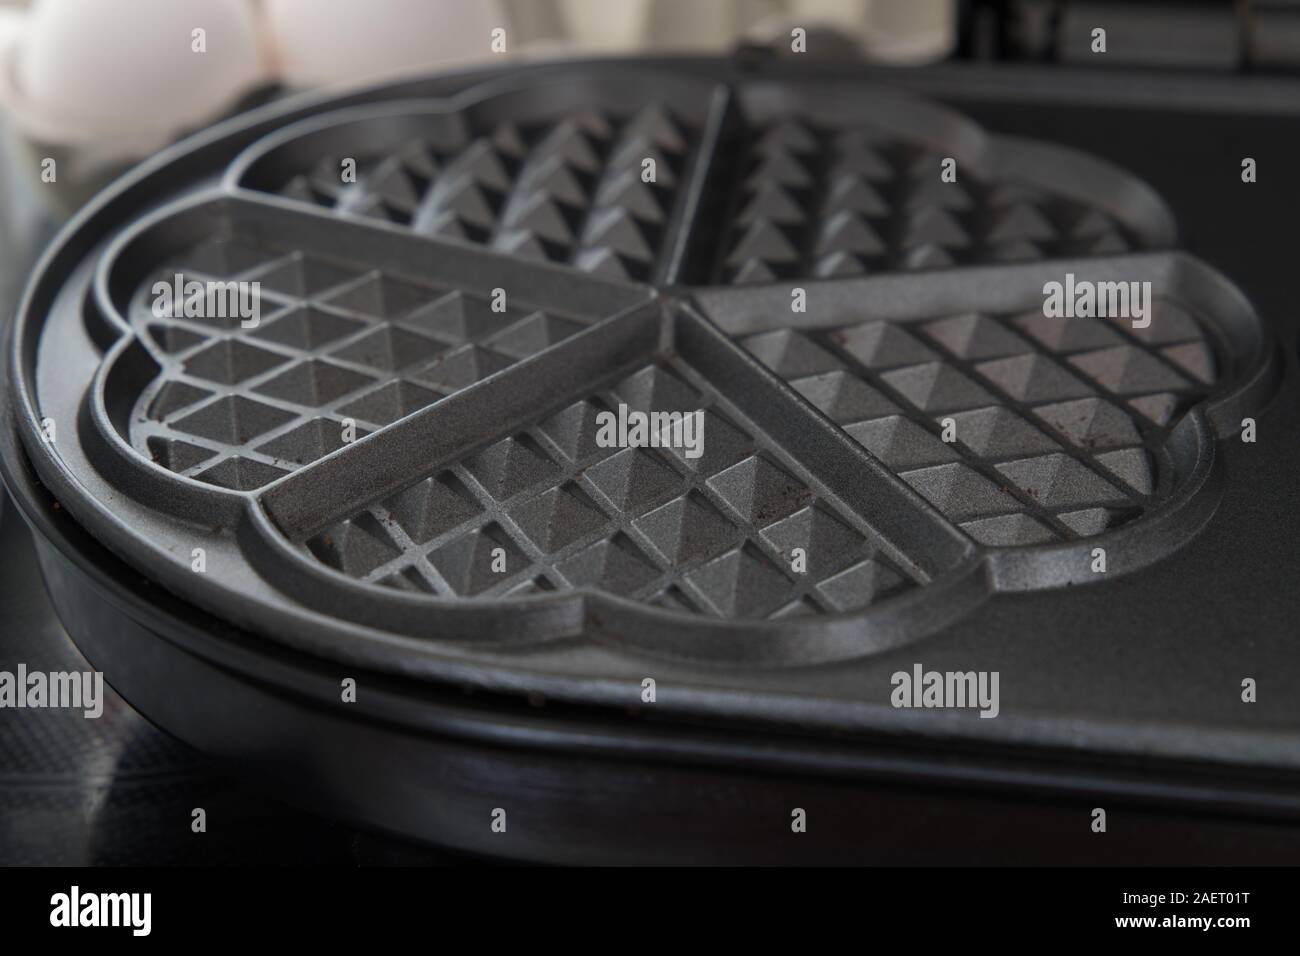 A black waffle iron for heart-shaped waffles Stock Photo